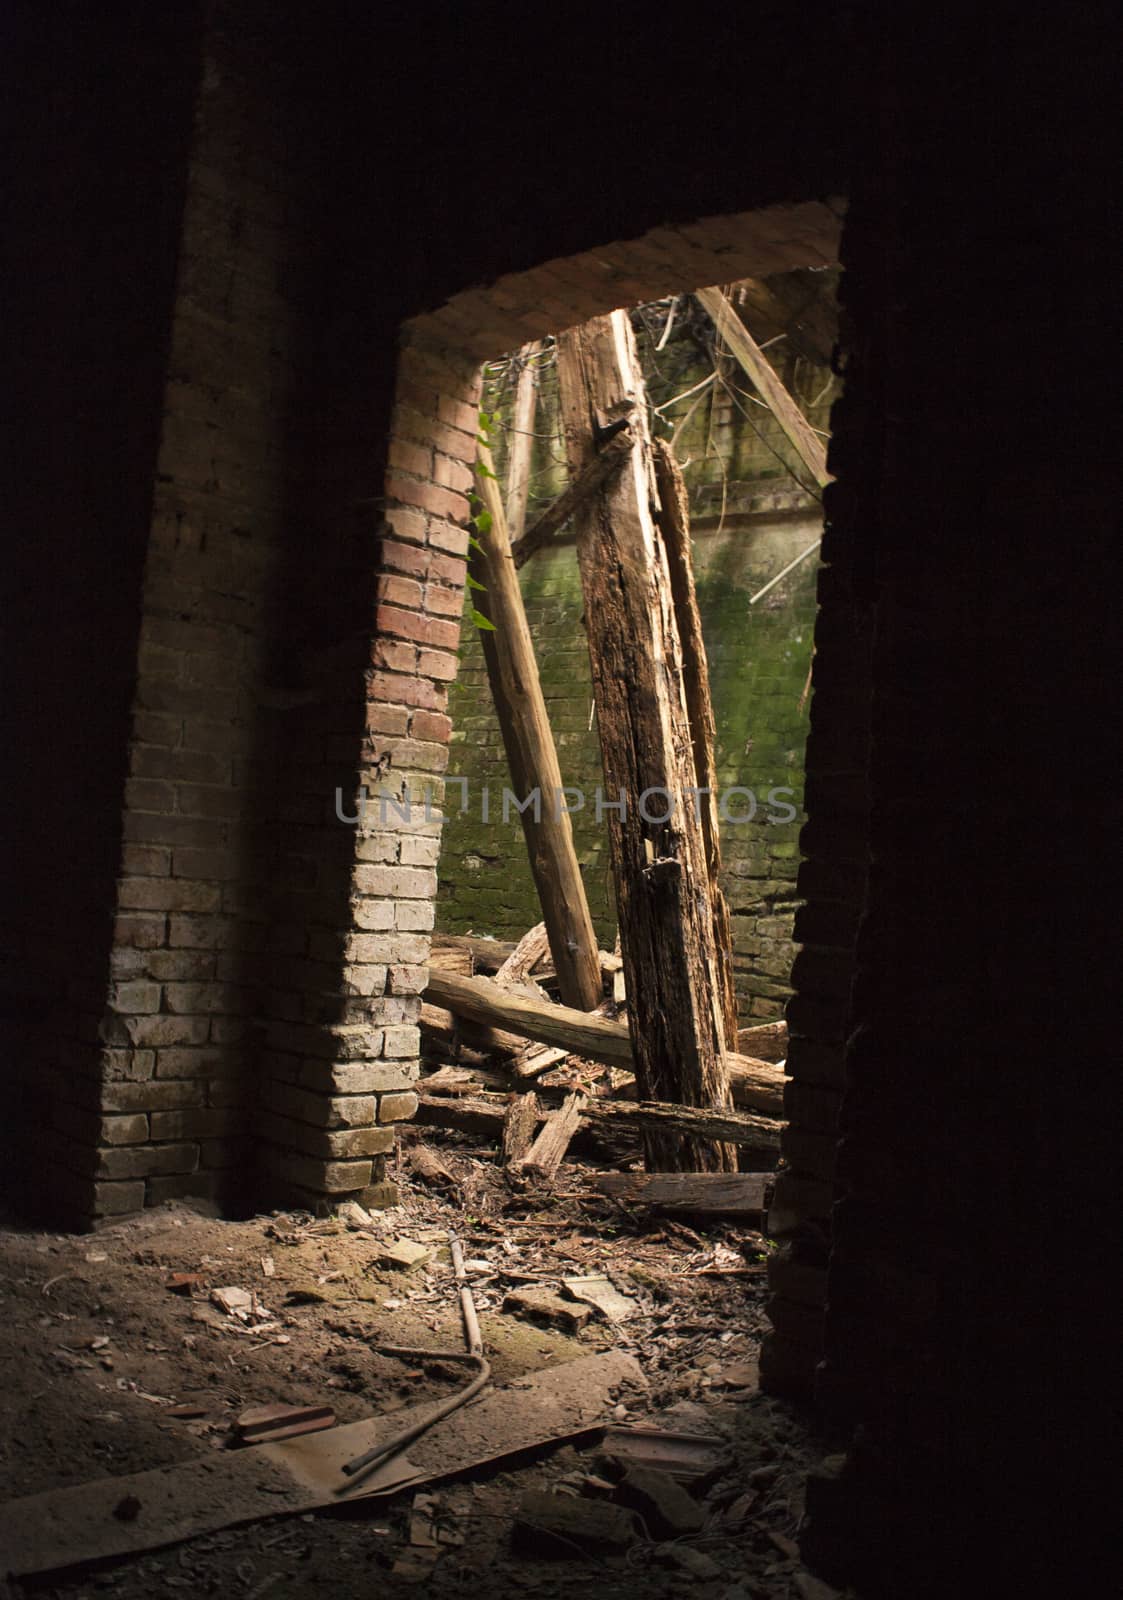 Old abandoned sugar mill located at Villanova Marchesana in Italy.